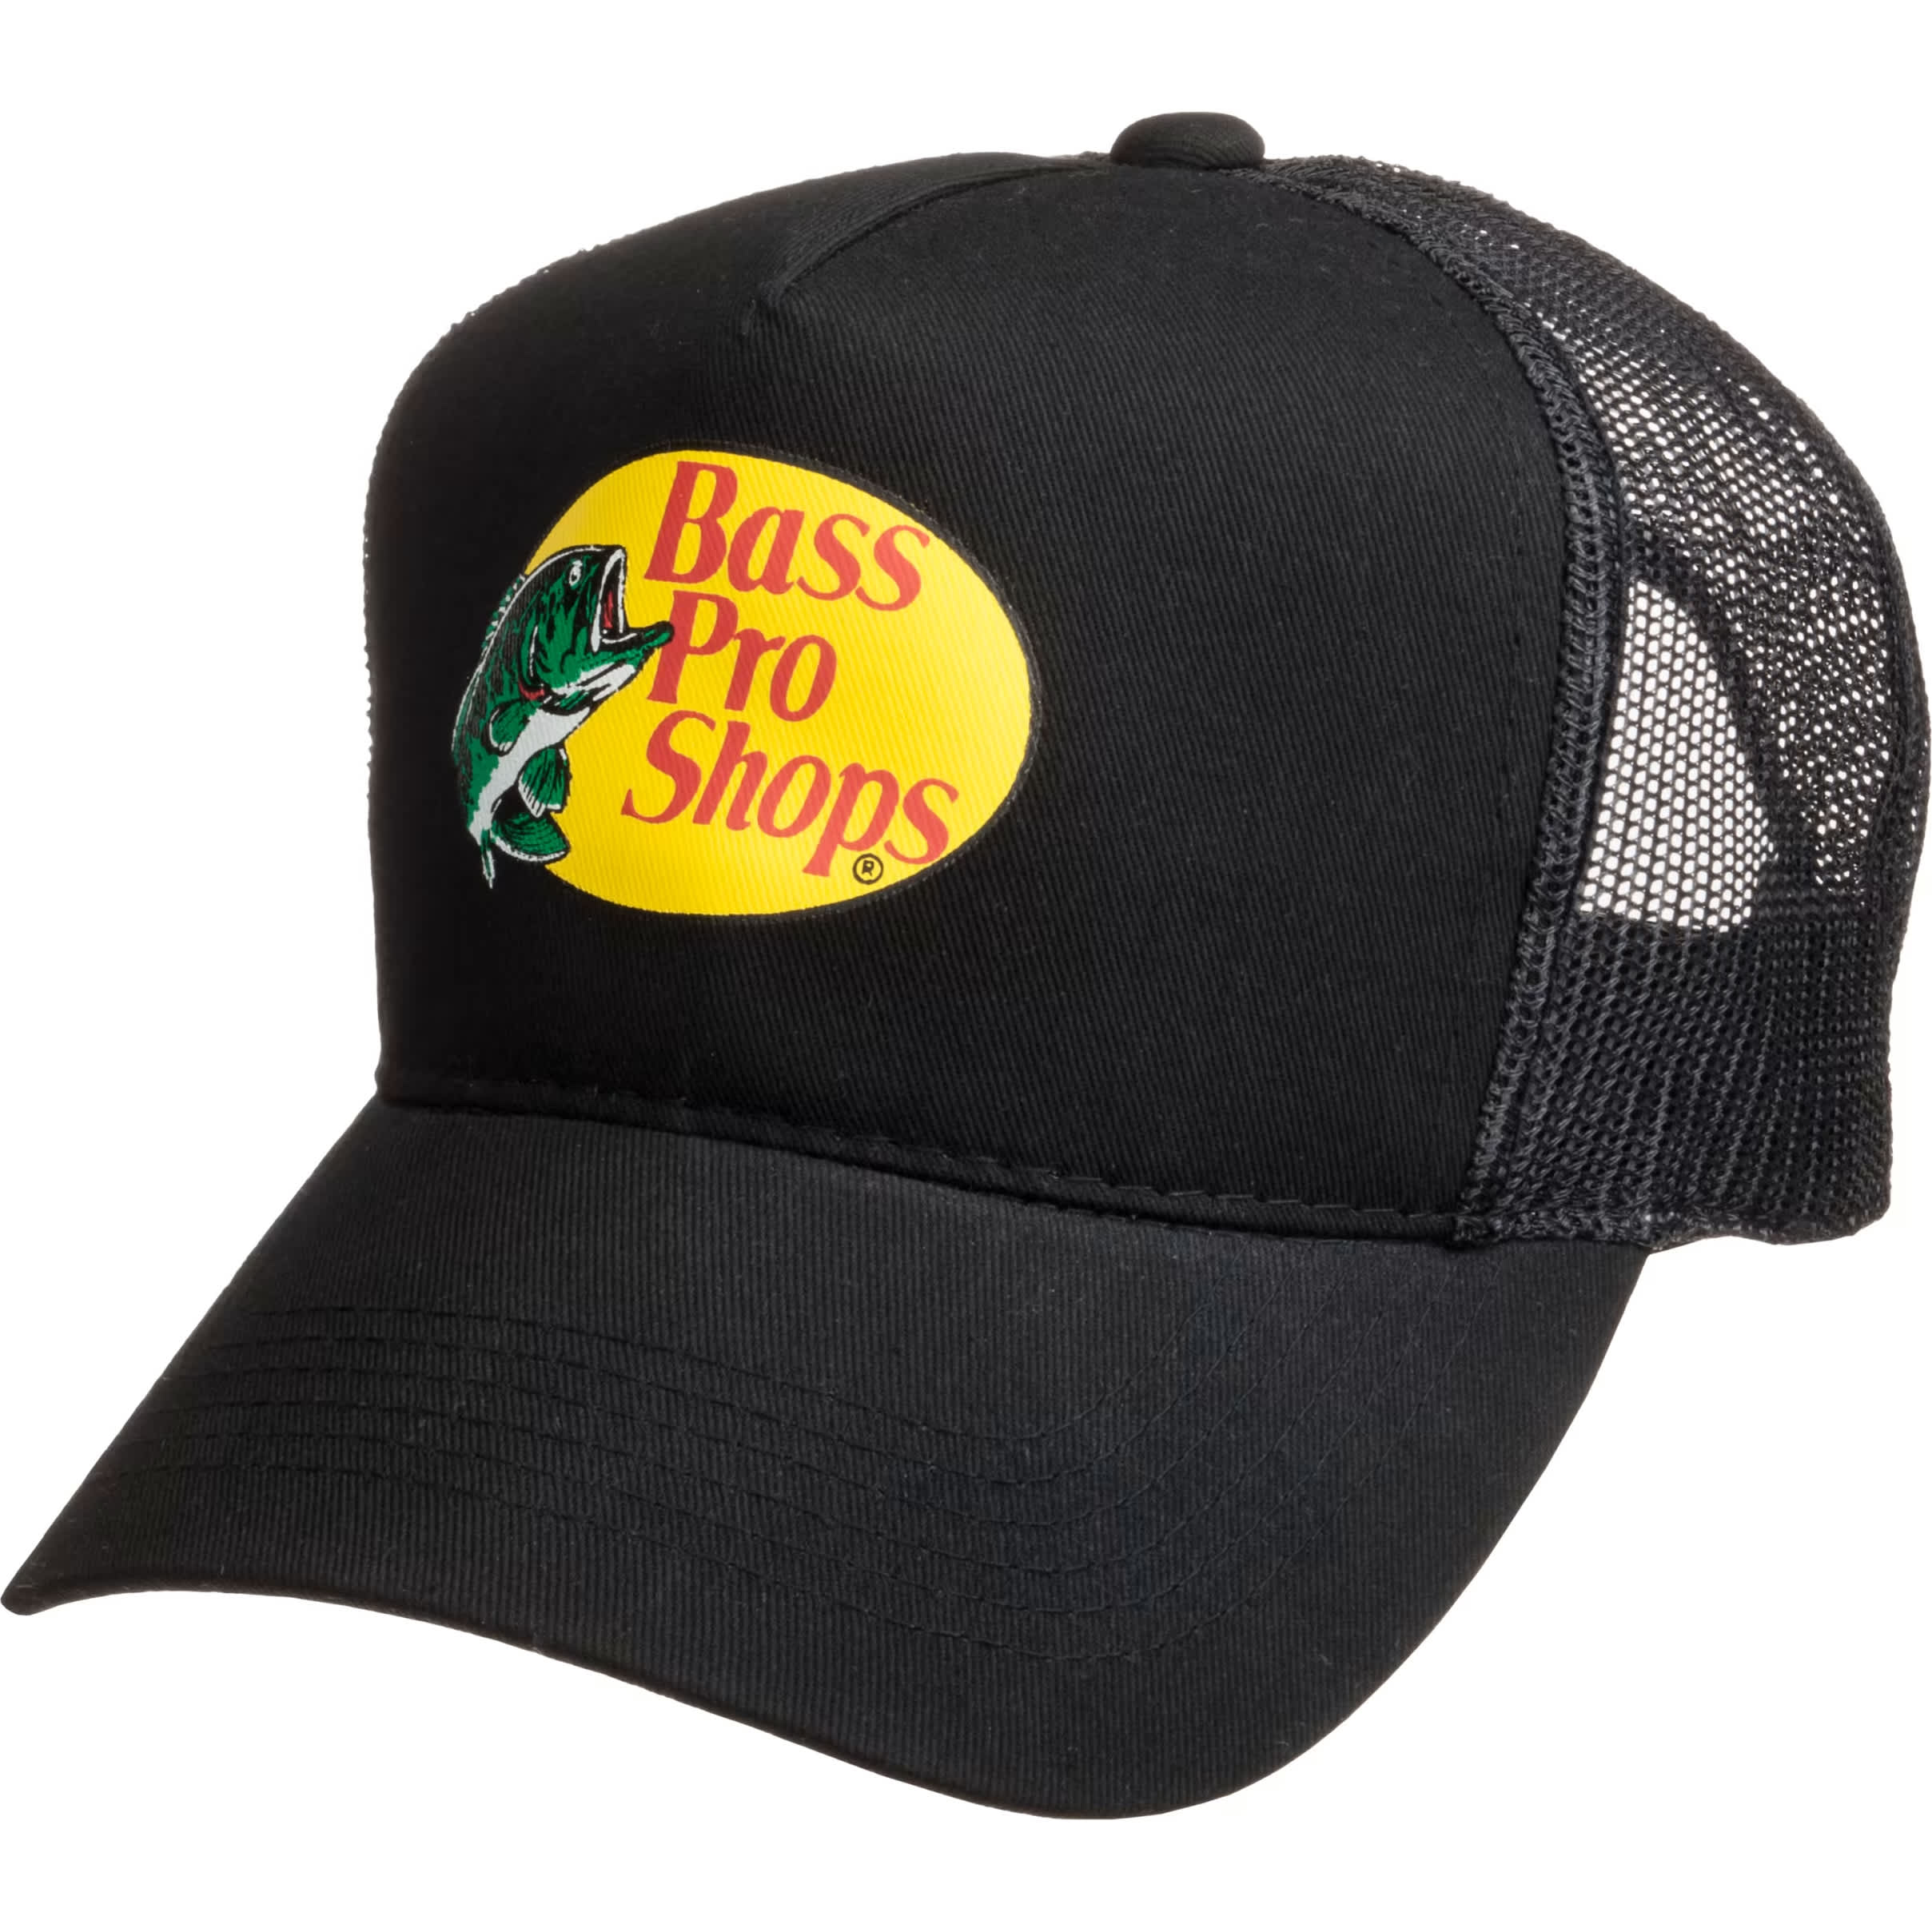  Bass Pro Shops Trucker Hat